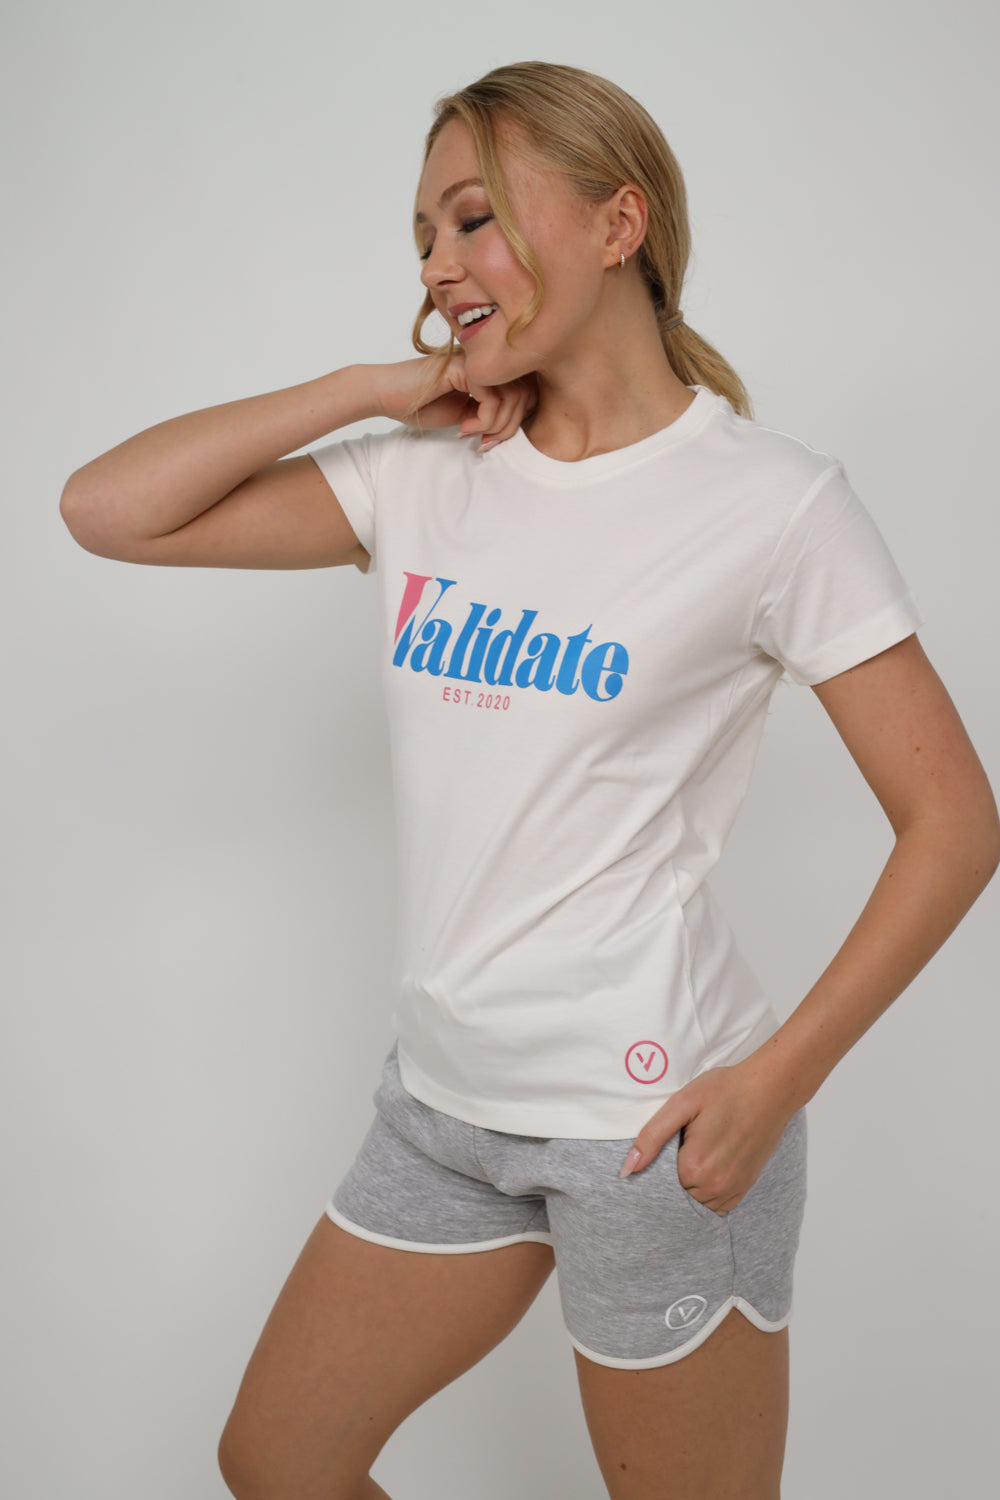 Validate Summer White T-Shirt | Validate Fashion Women's T-Shrits and Vests | Hertfordshire